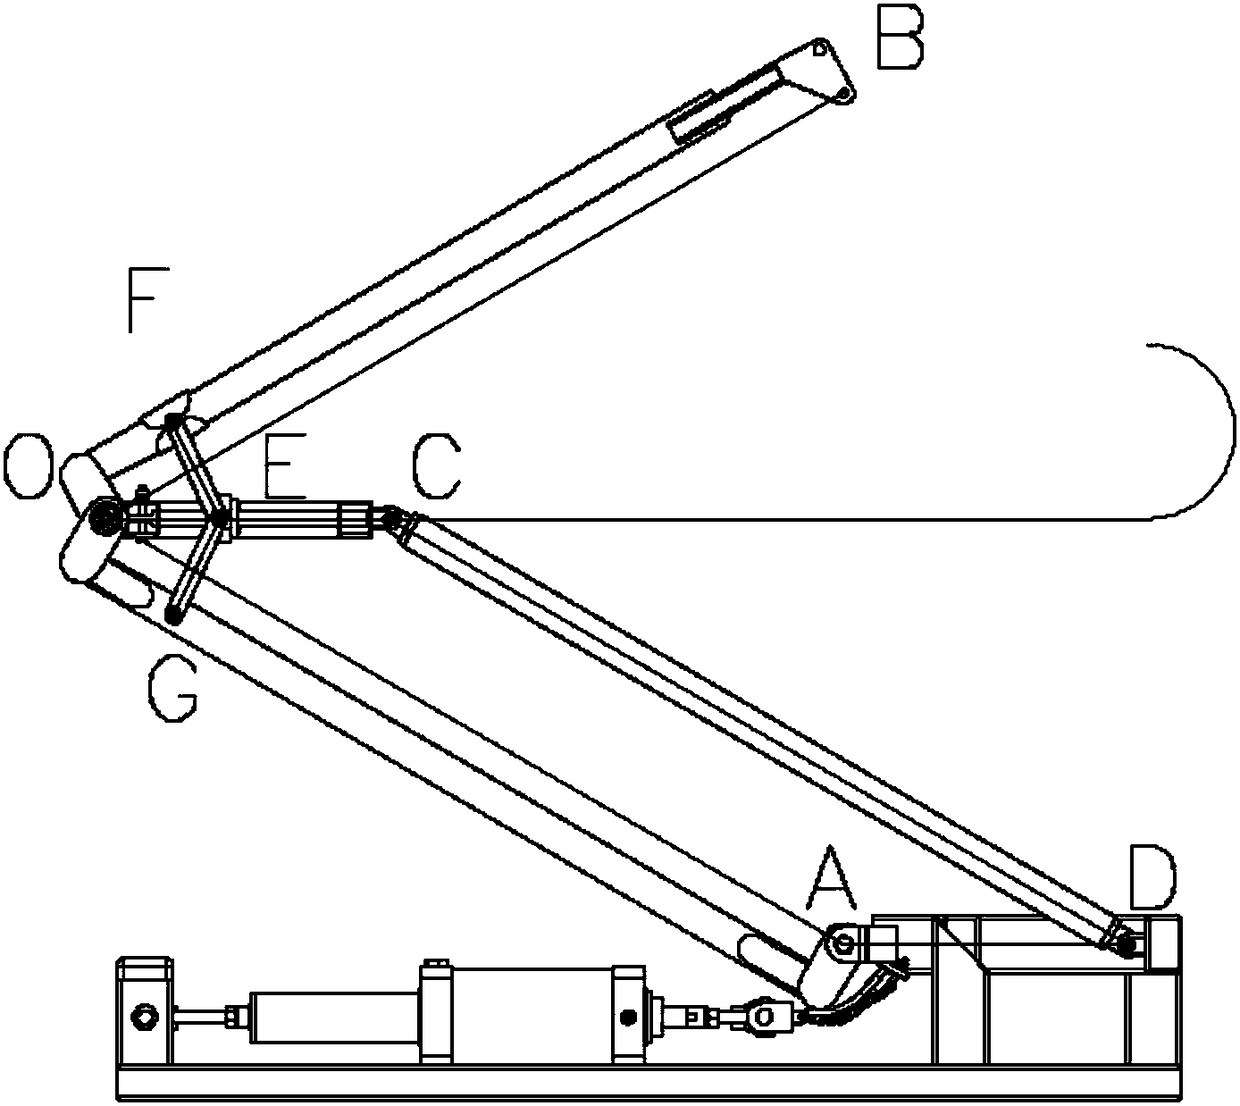 Novel umbrella-shaped vertical-lifting pantograph body